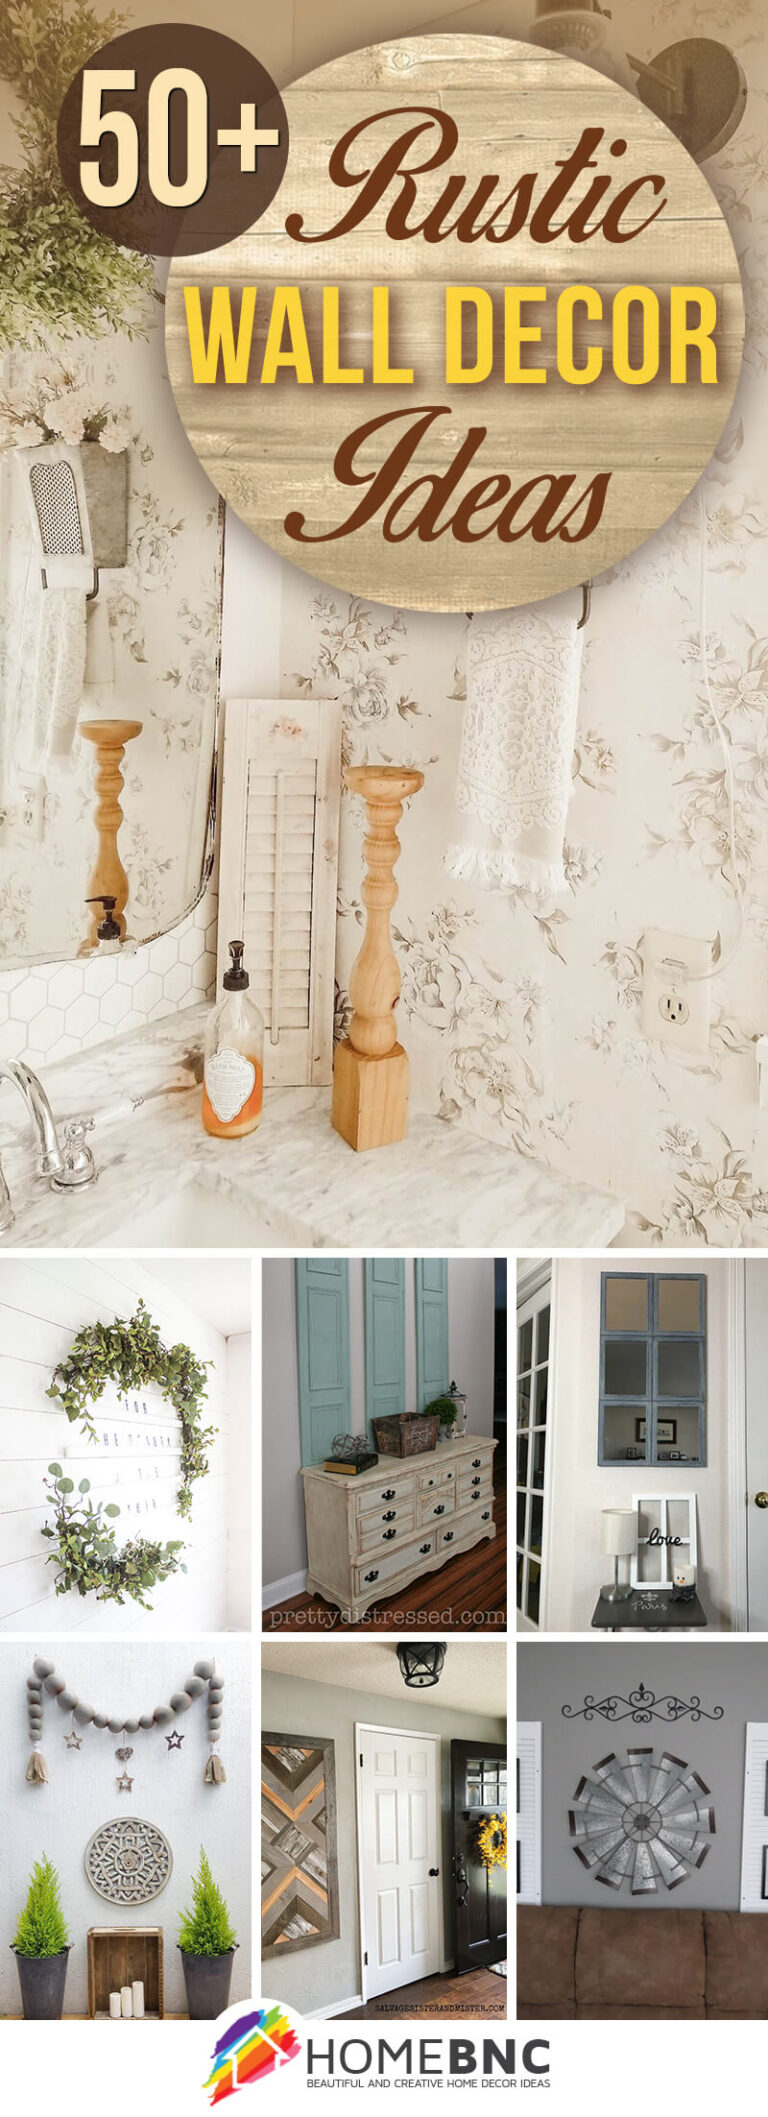 Rustic Wall Decor Ideas Pinterest Share Homebnc V6 768x2117 